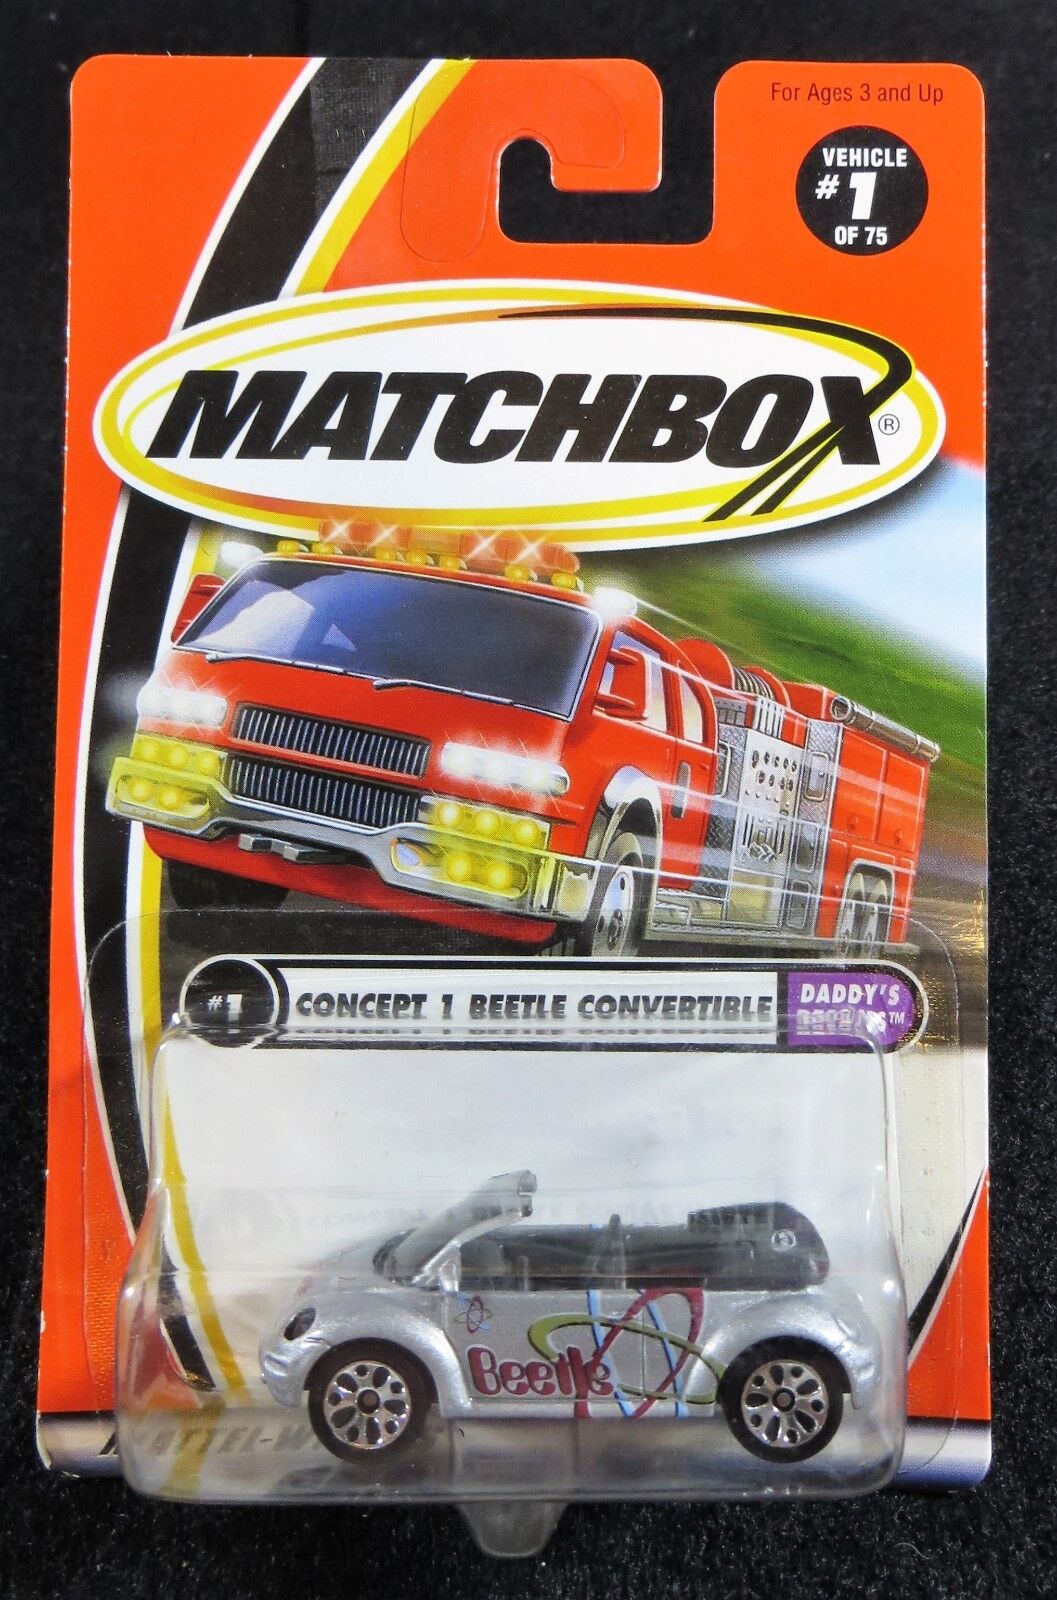 2001  Matchbox    Silver Concept 1 Beetle Convertible   Card  #1  MB-7